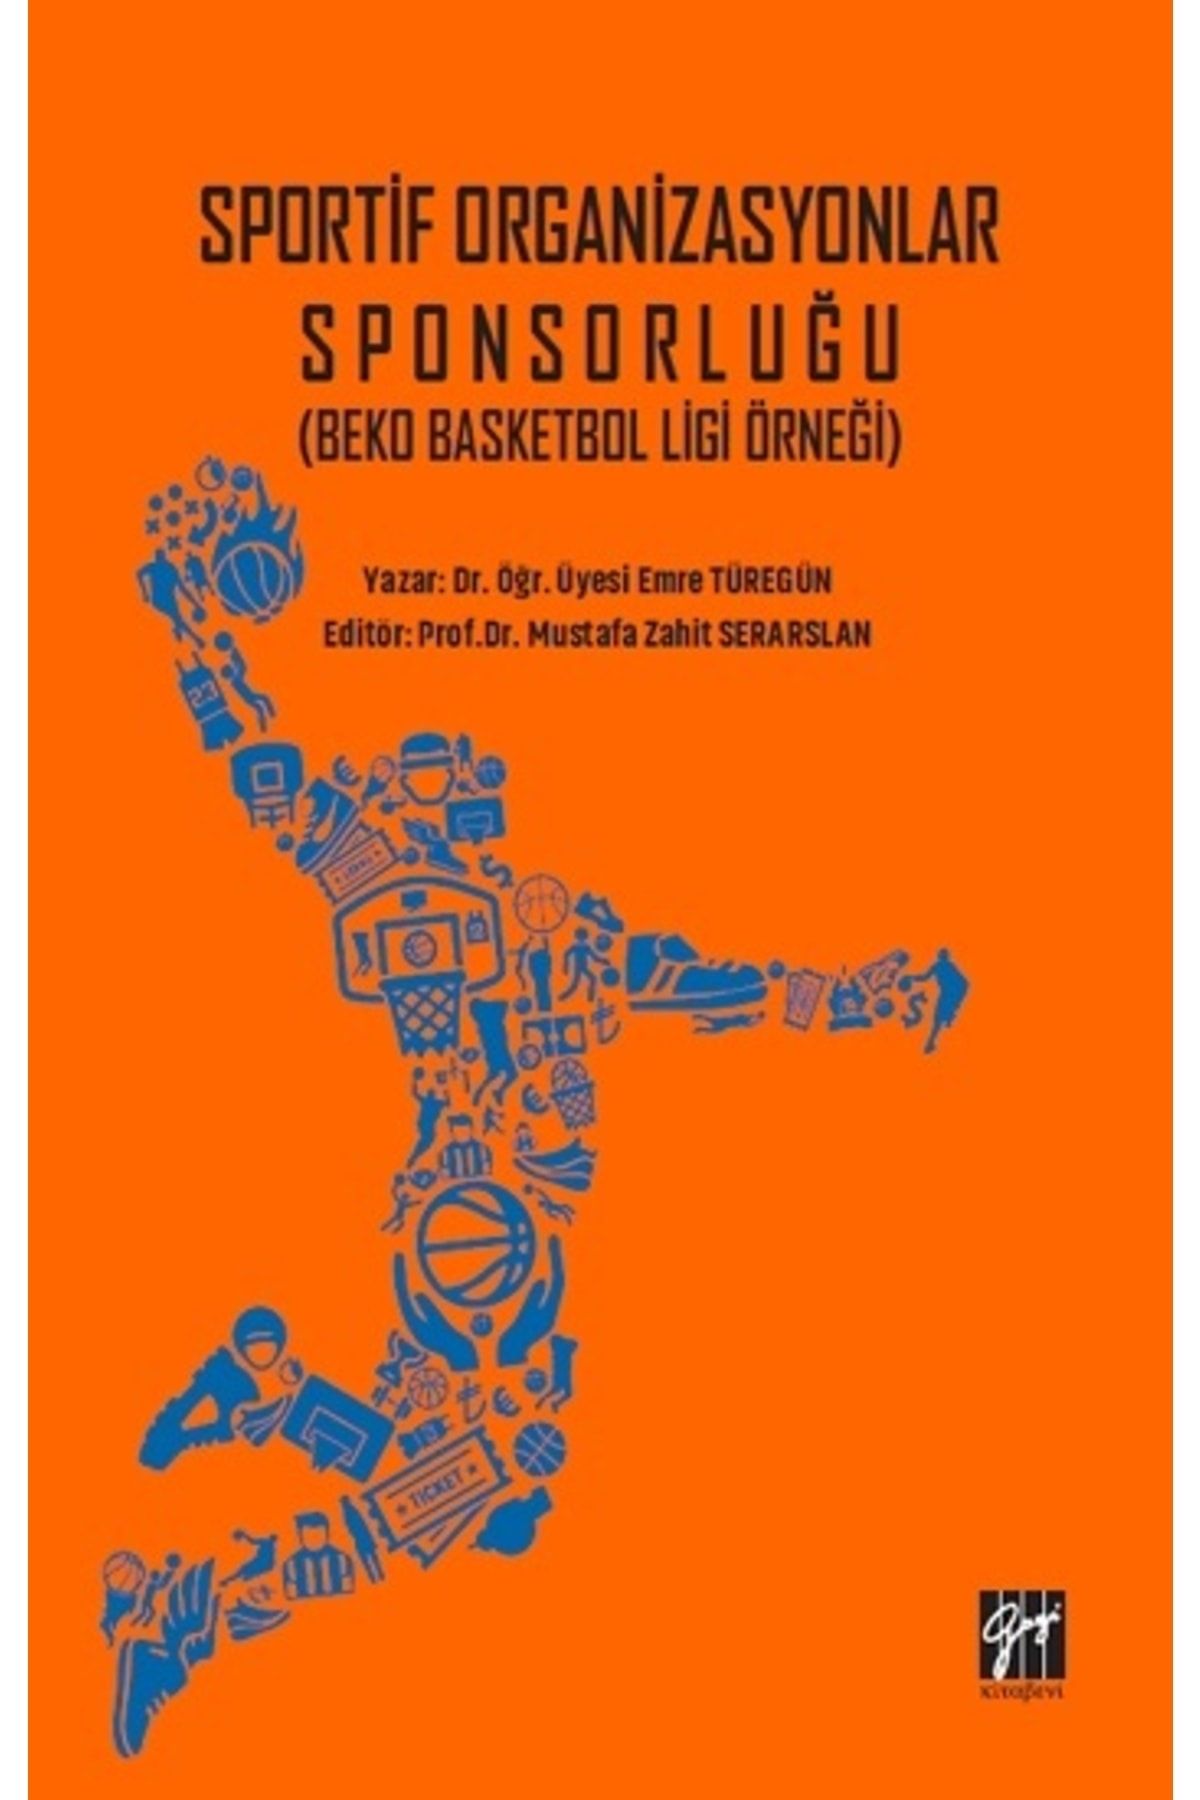 Gazi Kitabevi Sportif Organizasyonlar Sponsorluğu kitabı - Gazi Kitabevi